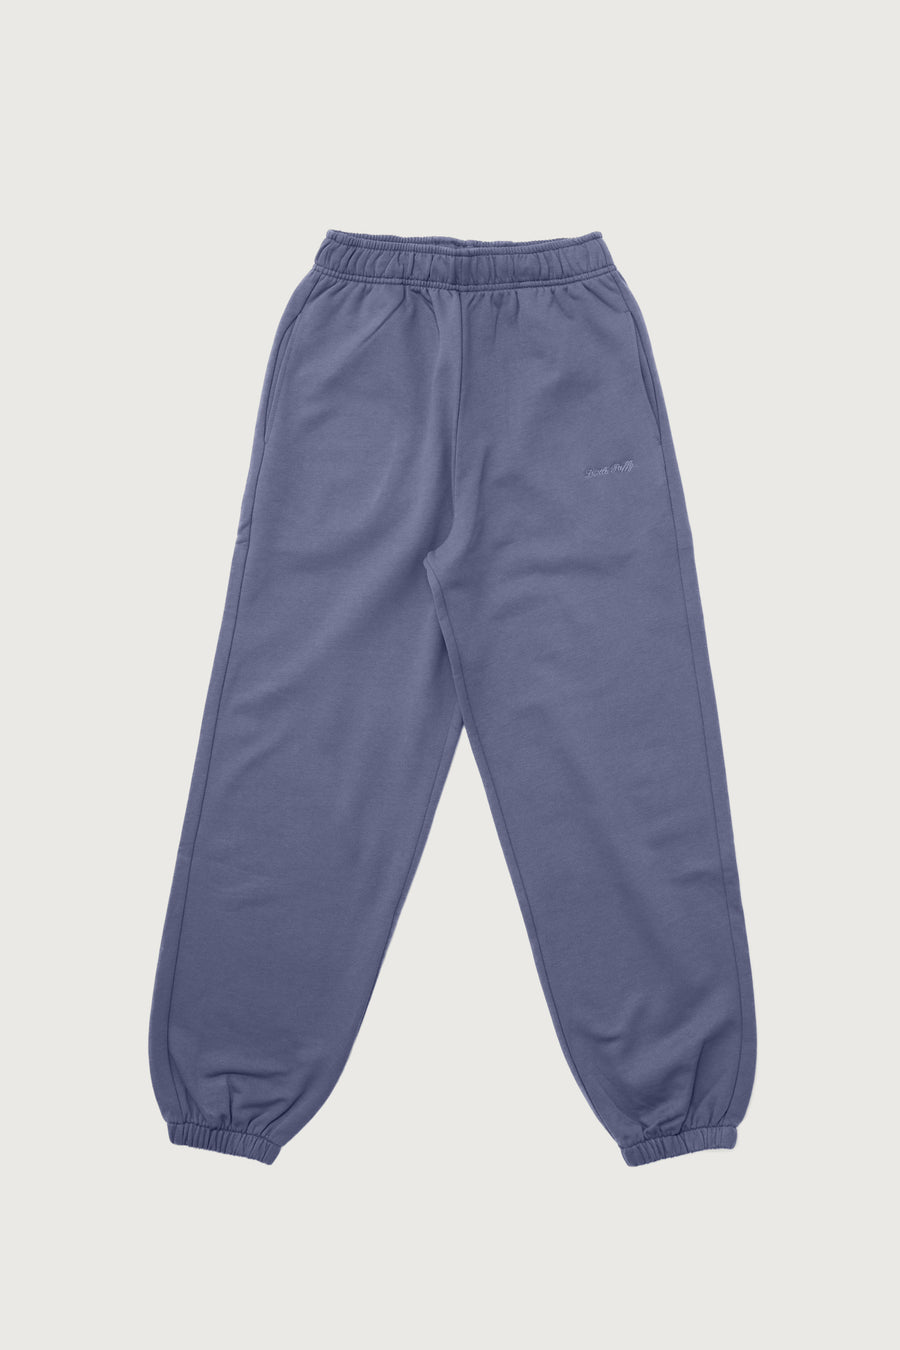 Core Sweatpants + Space Blue - Little Puffy